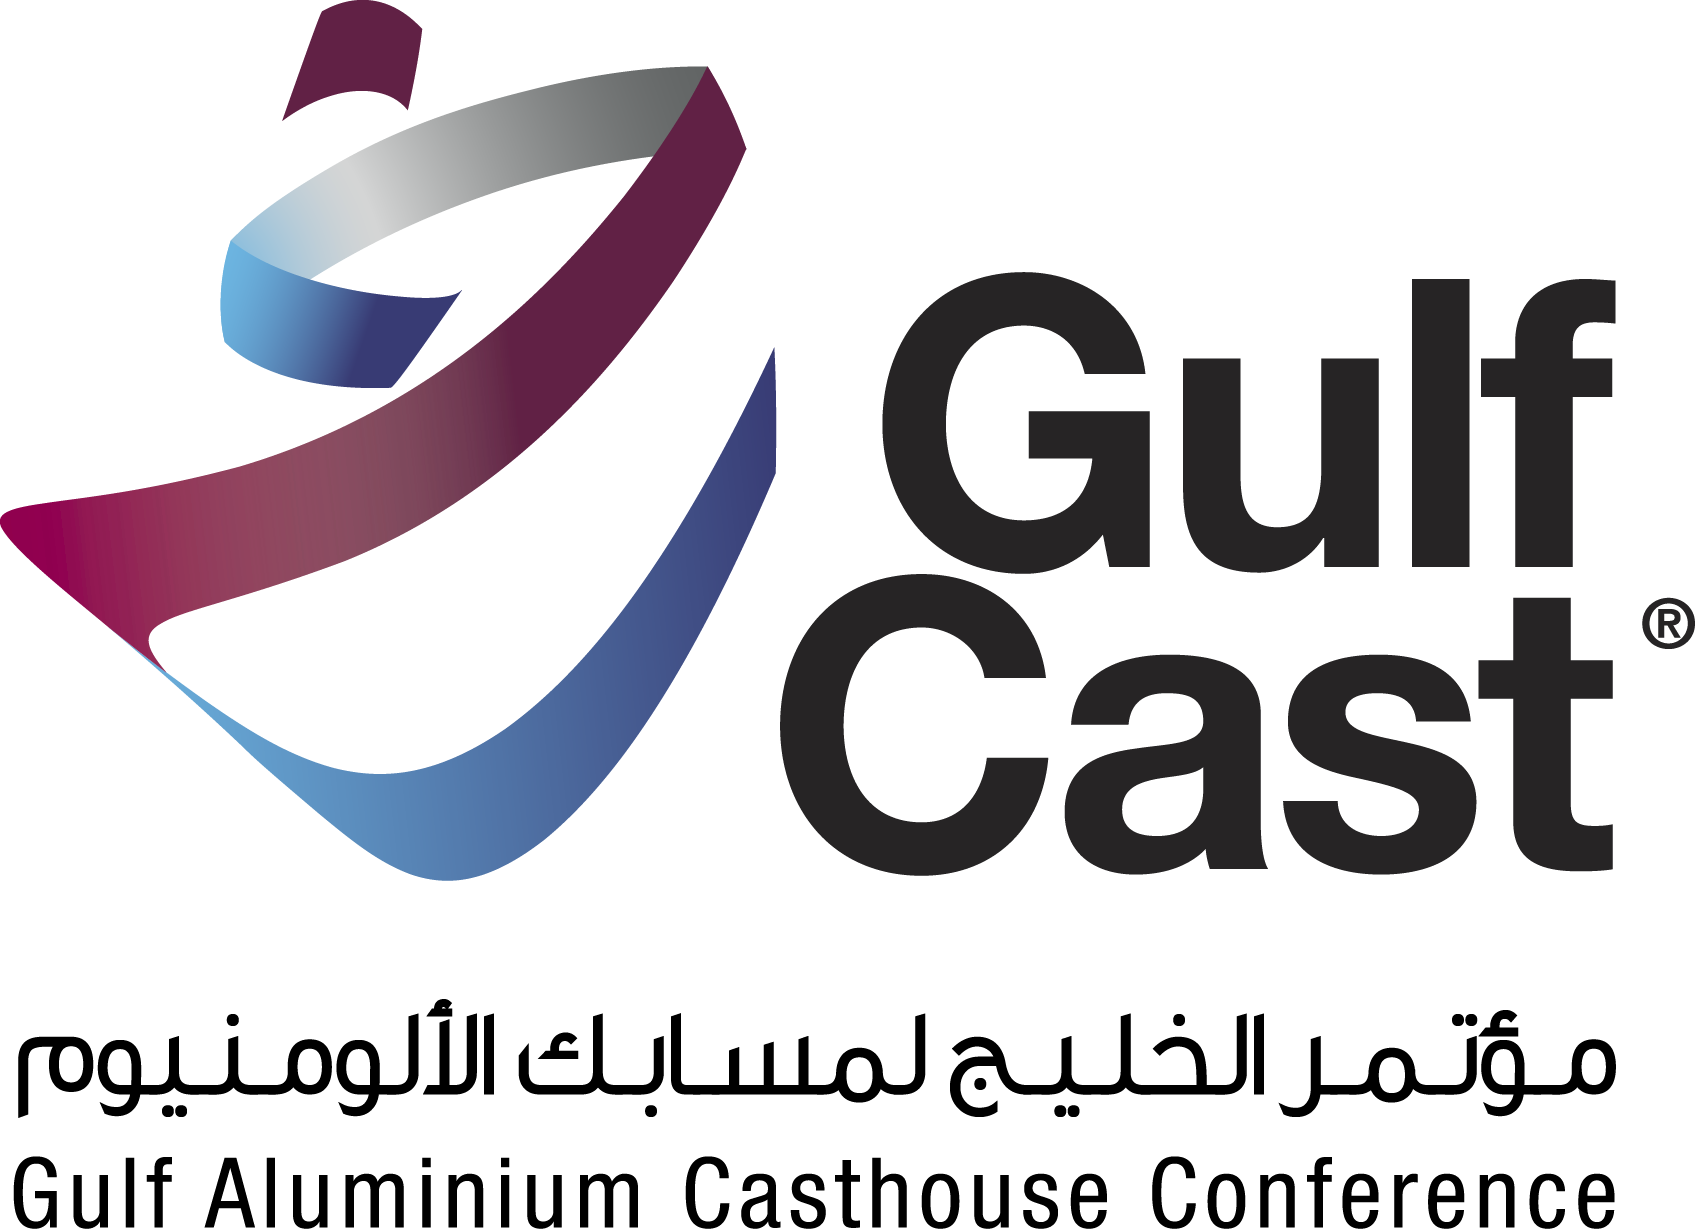 Gulf Aluminium Casthouse Conference (GulfCast) 2015